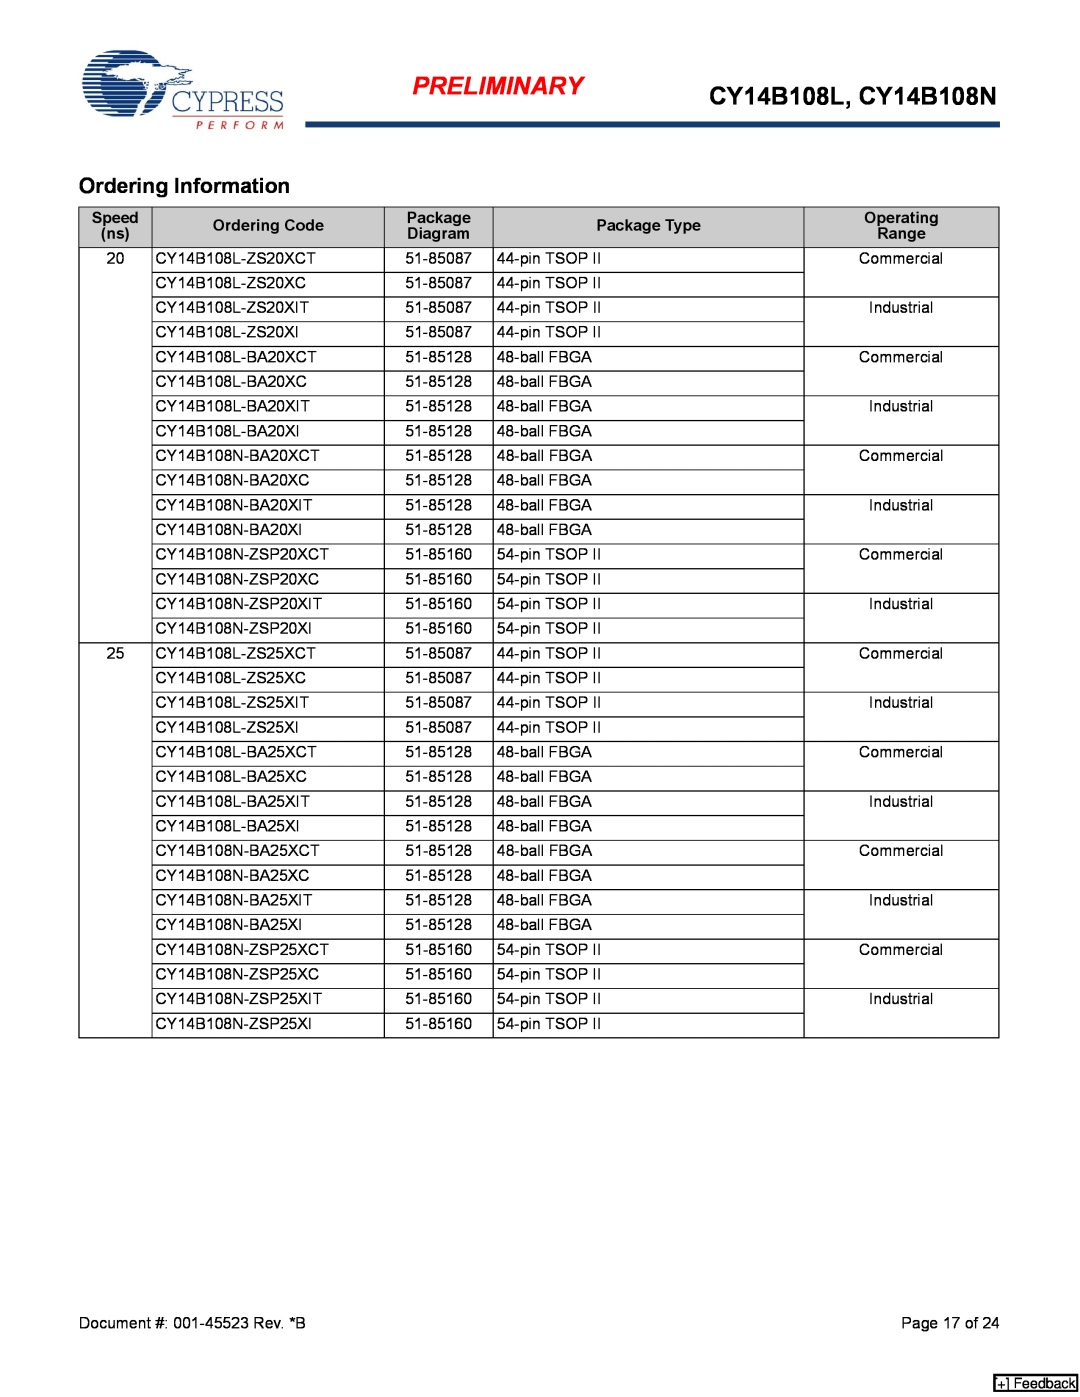 Cypress manual Ordering Information, Preliminary, CY14B108L, CY14B108N 